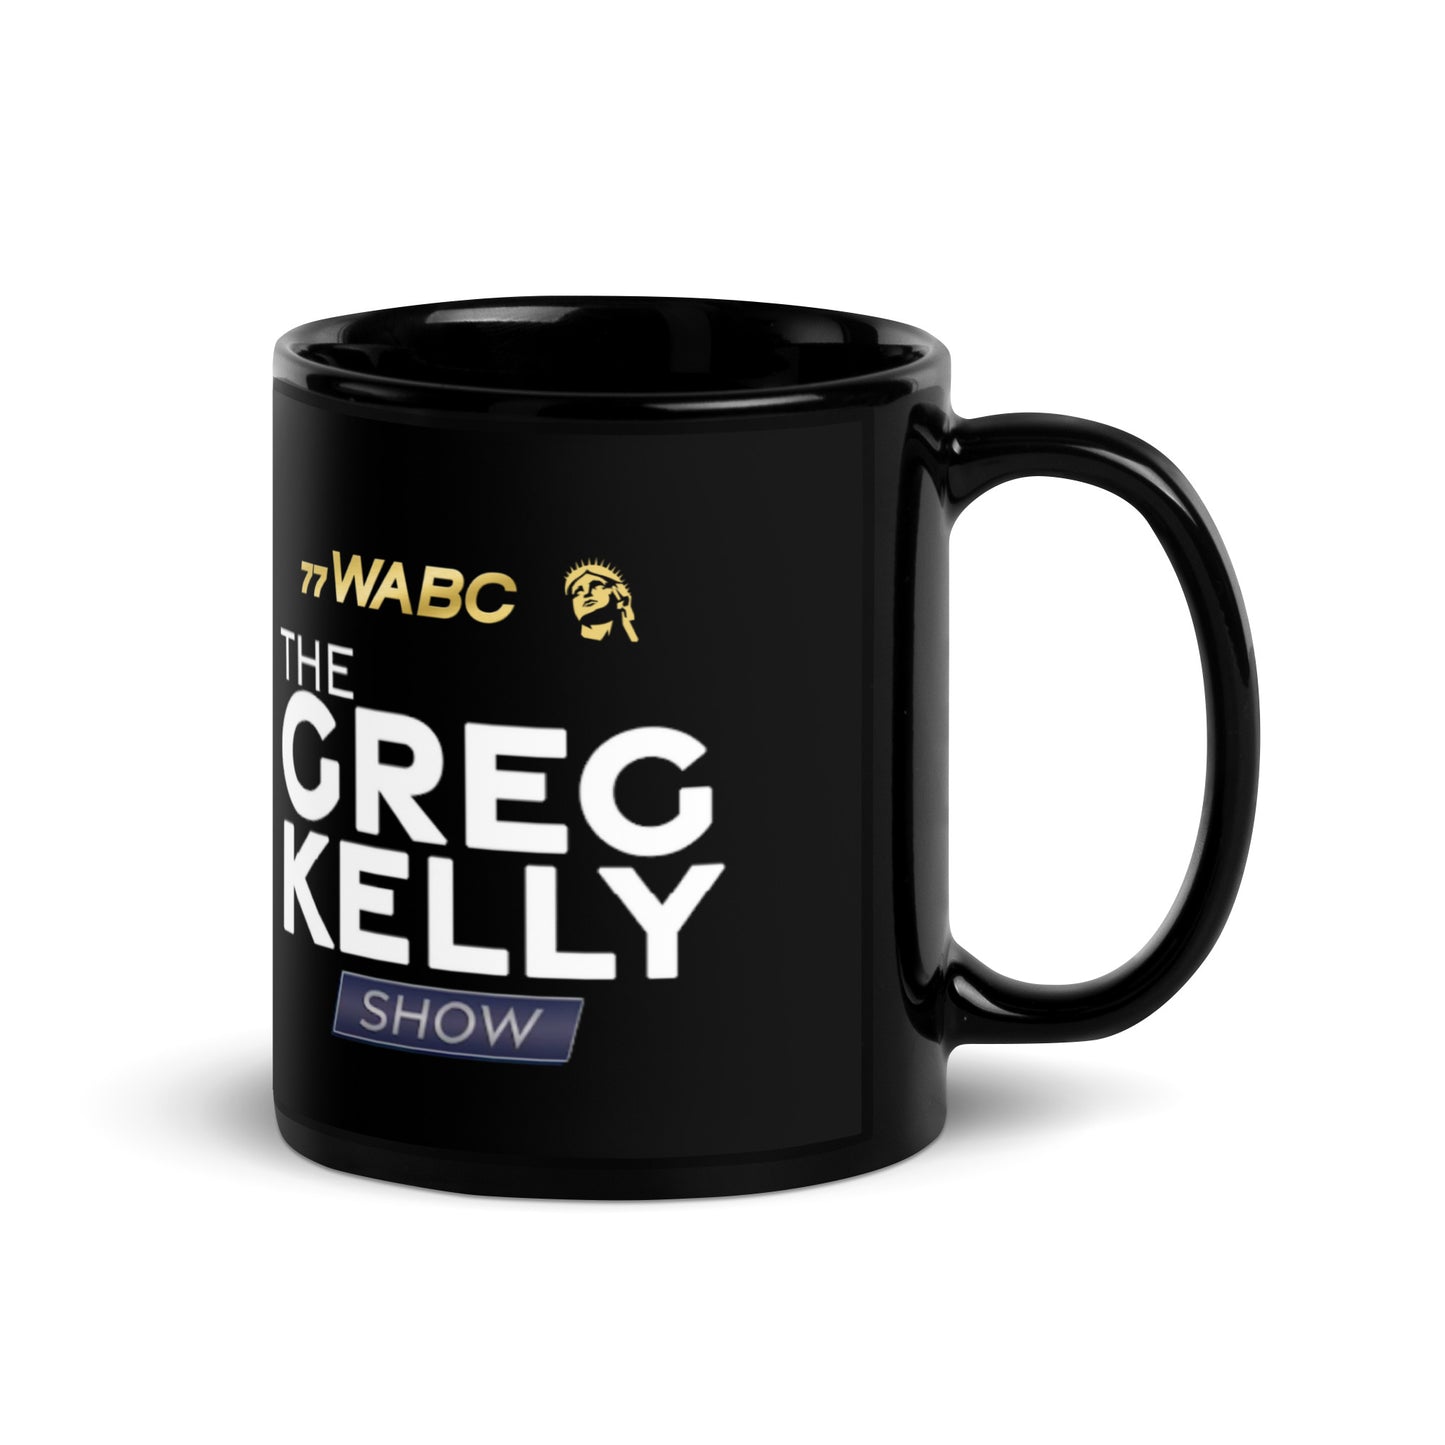 Greg Kelly Black Glossy Mug